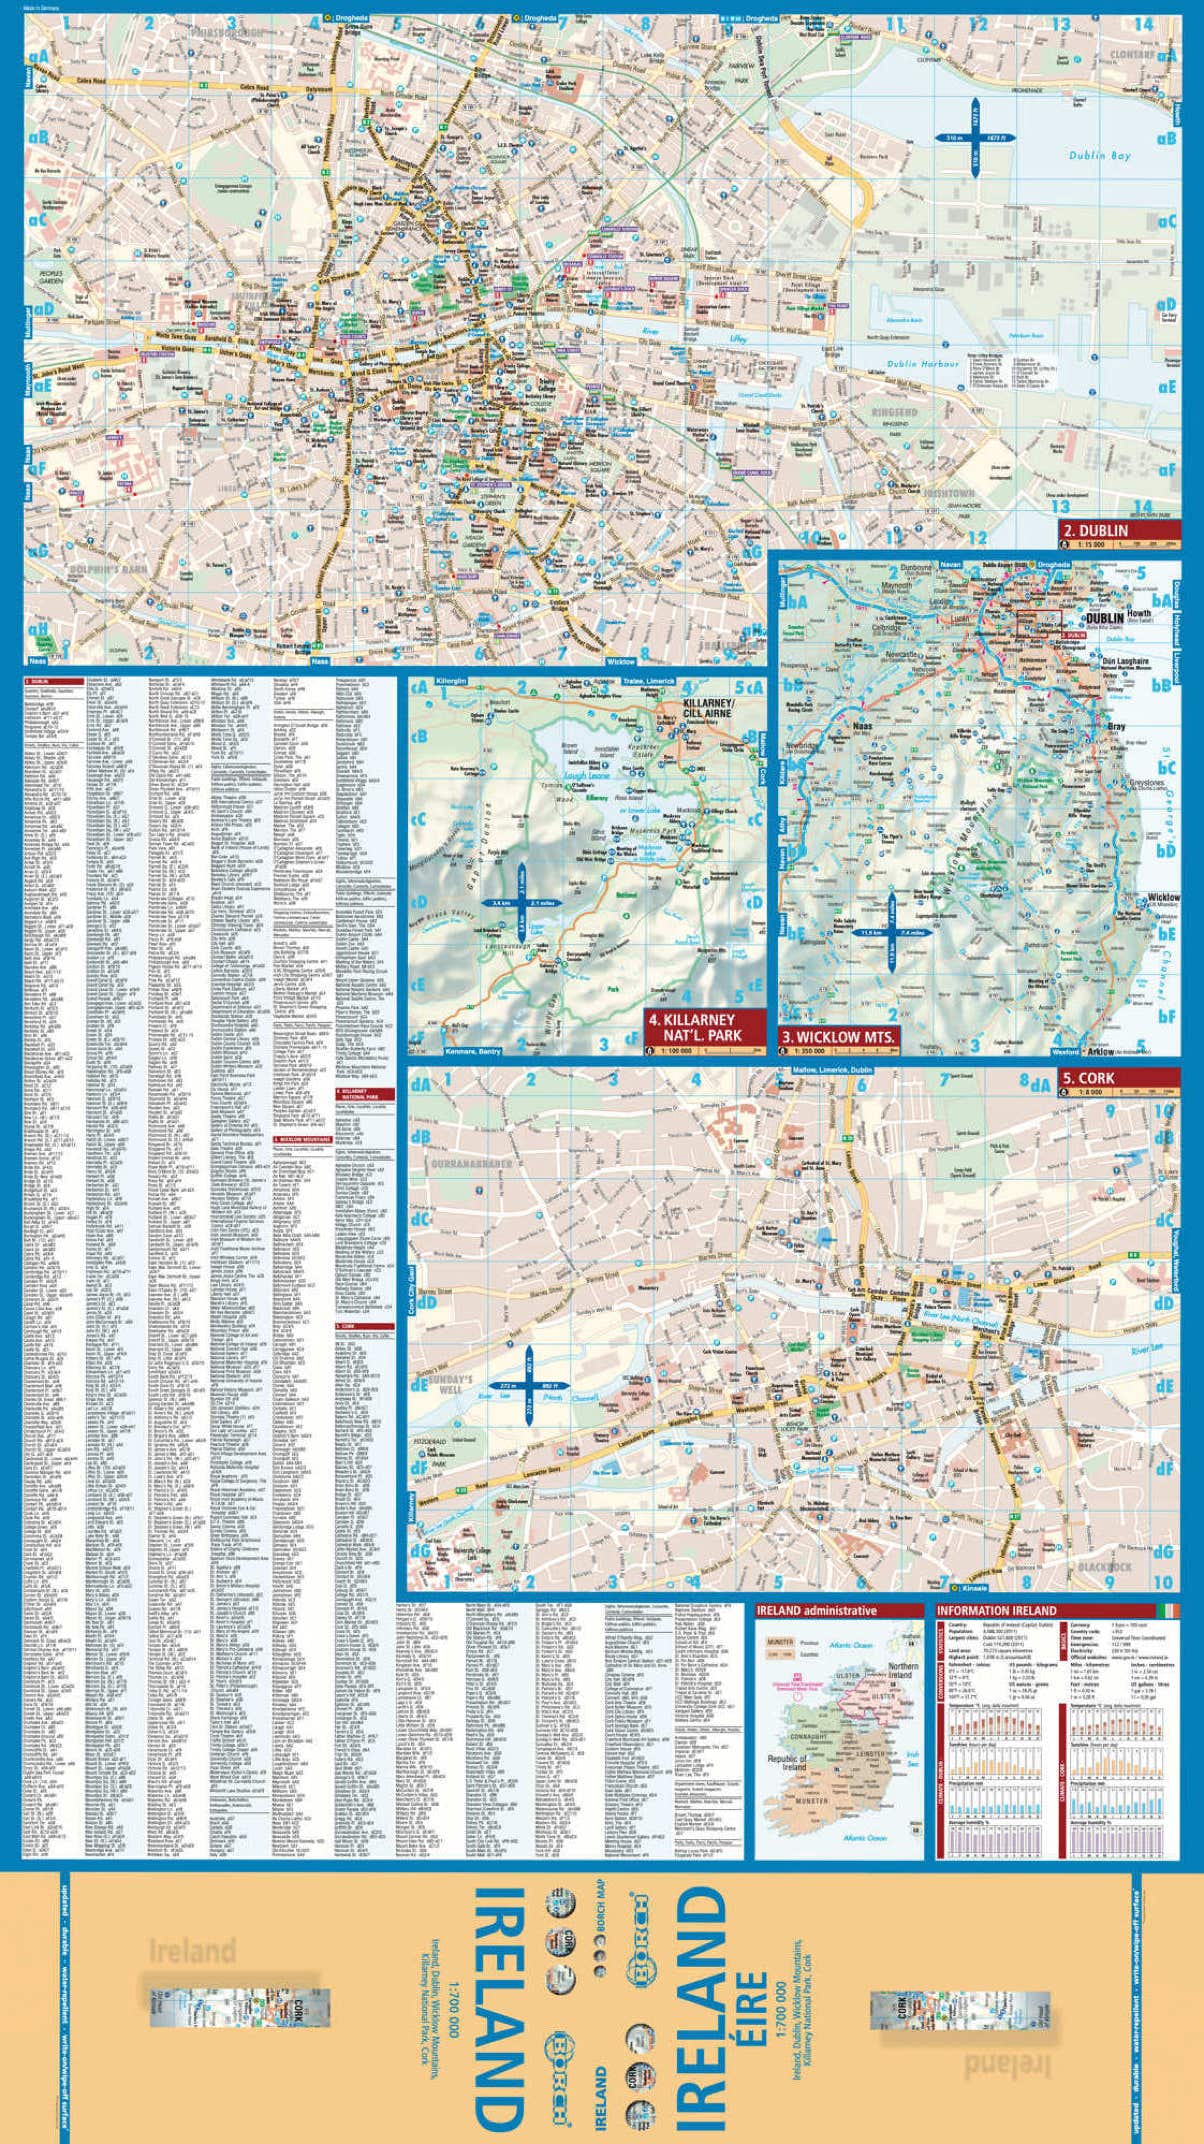 Ireland Borch Map - page 2 